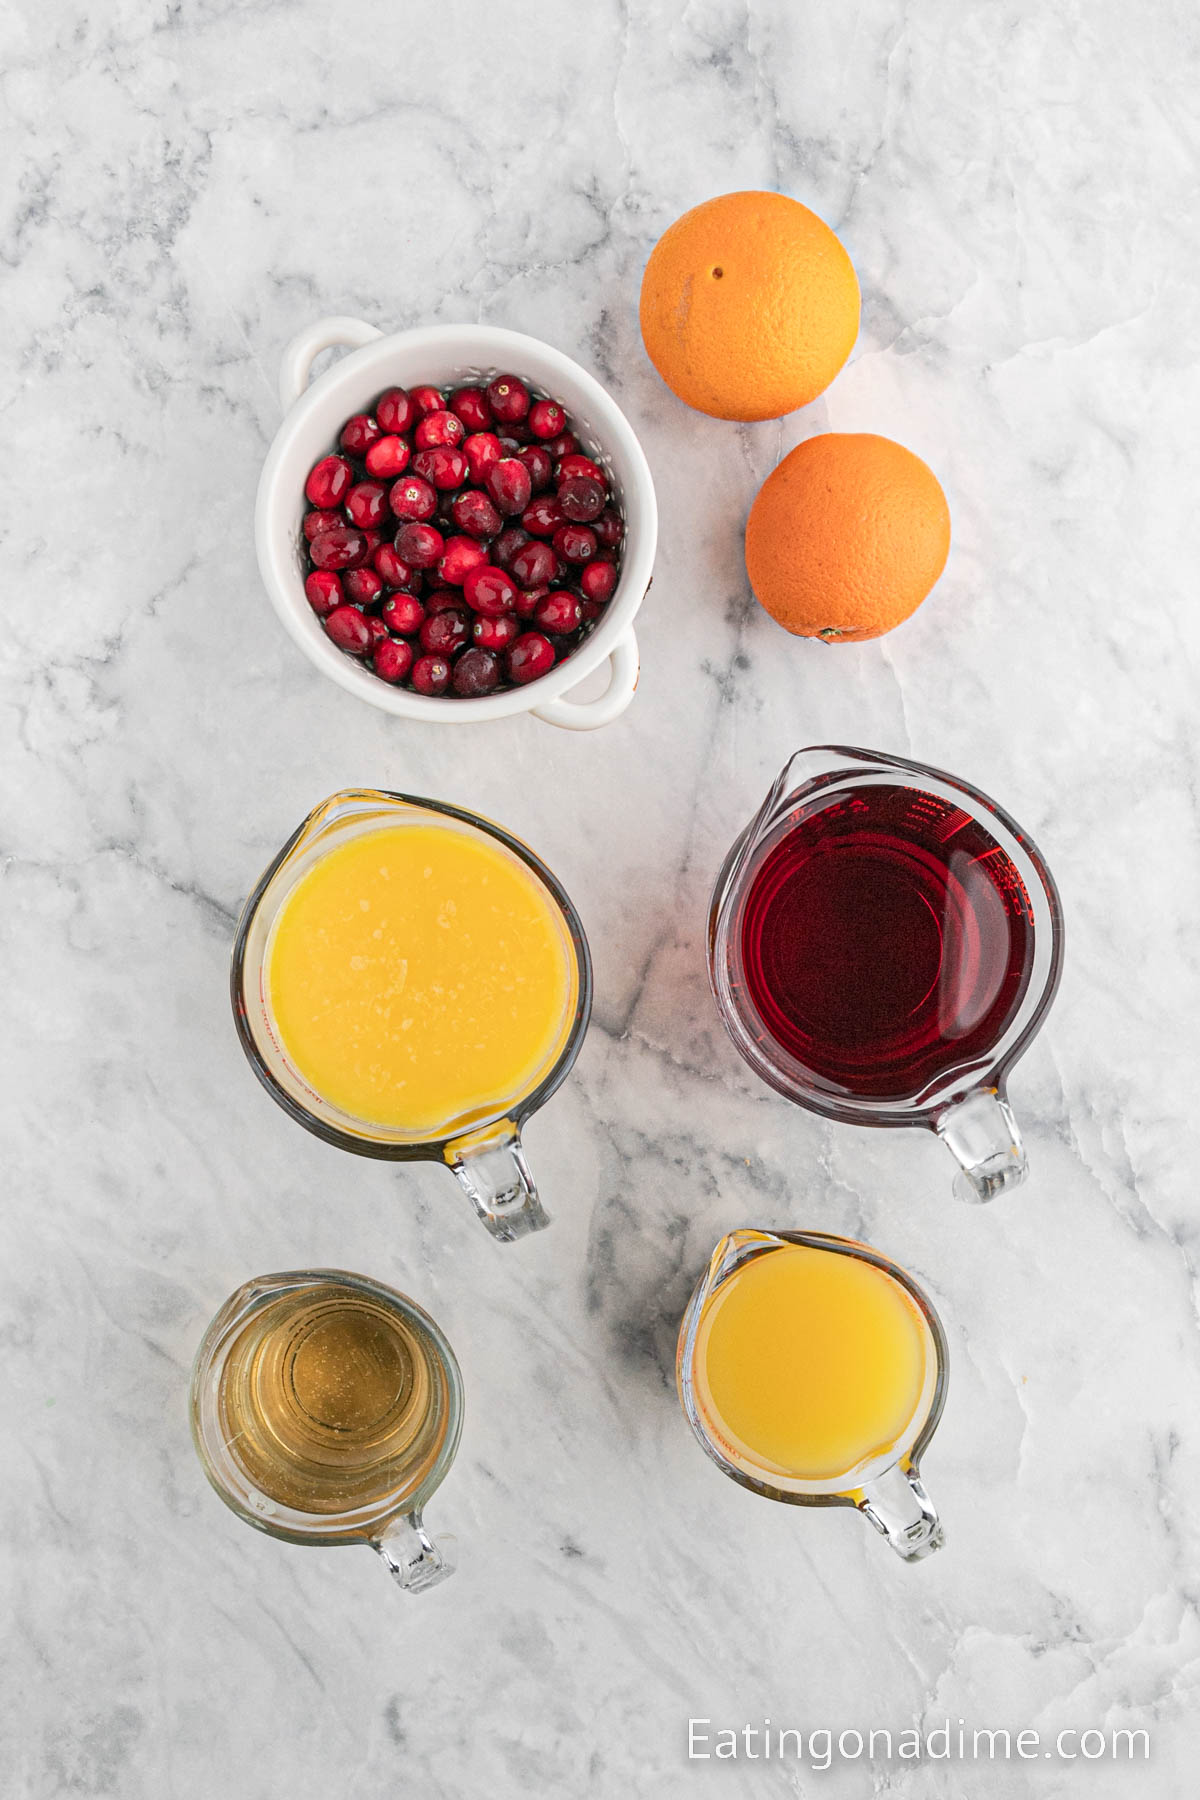 Ingredients needed - cranberry juice, orange juice, pineapple juice, ginger ale, cranberries, orange